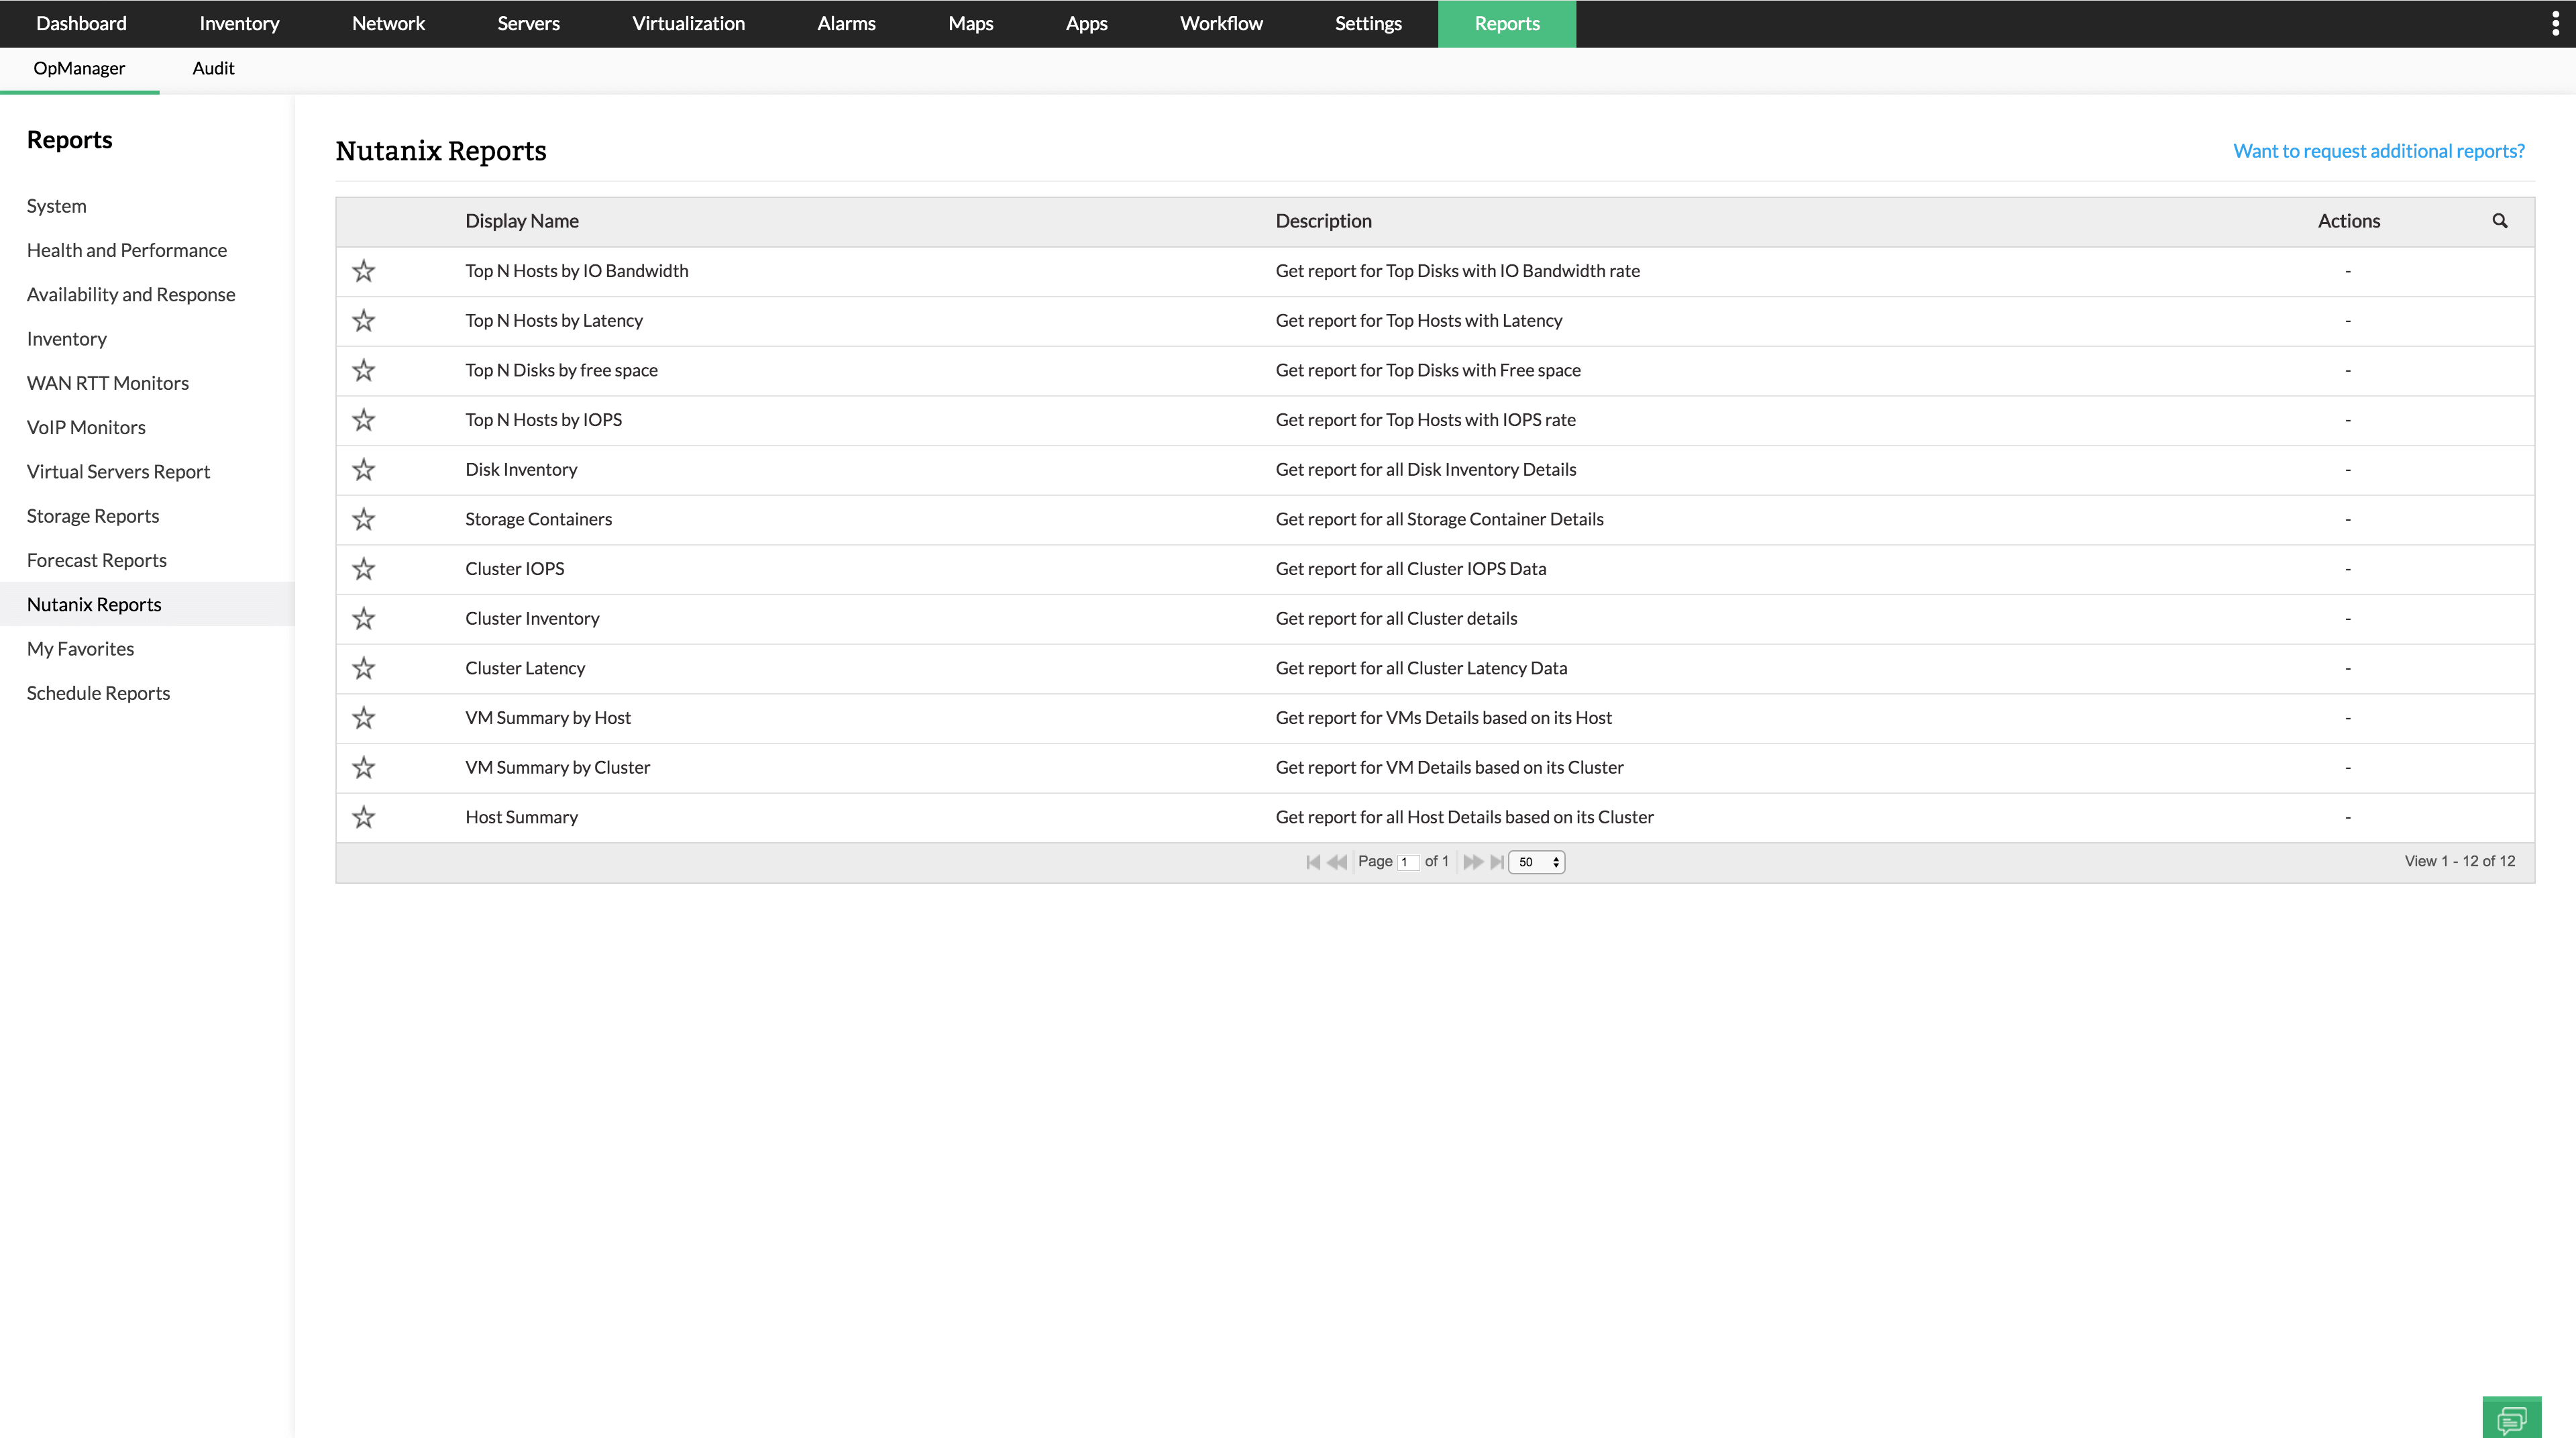 Dashboard informes de monitoreo de Nutanix - ManageEngine OpManager